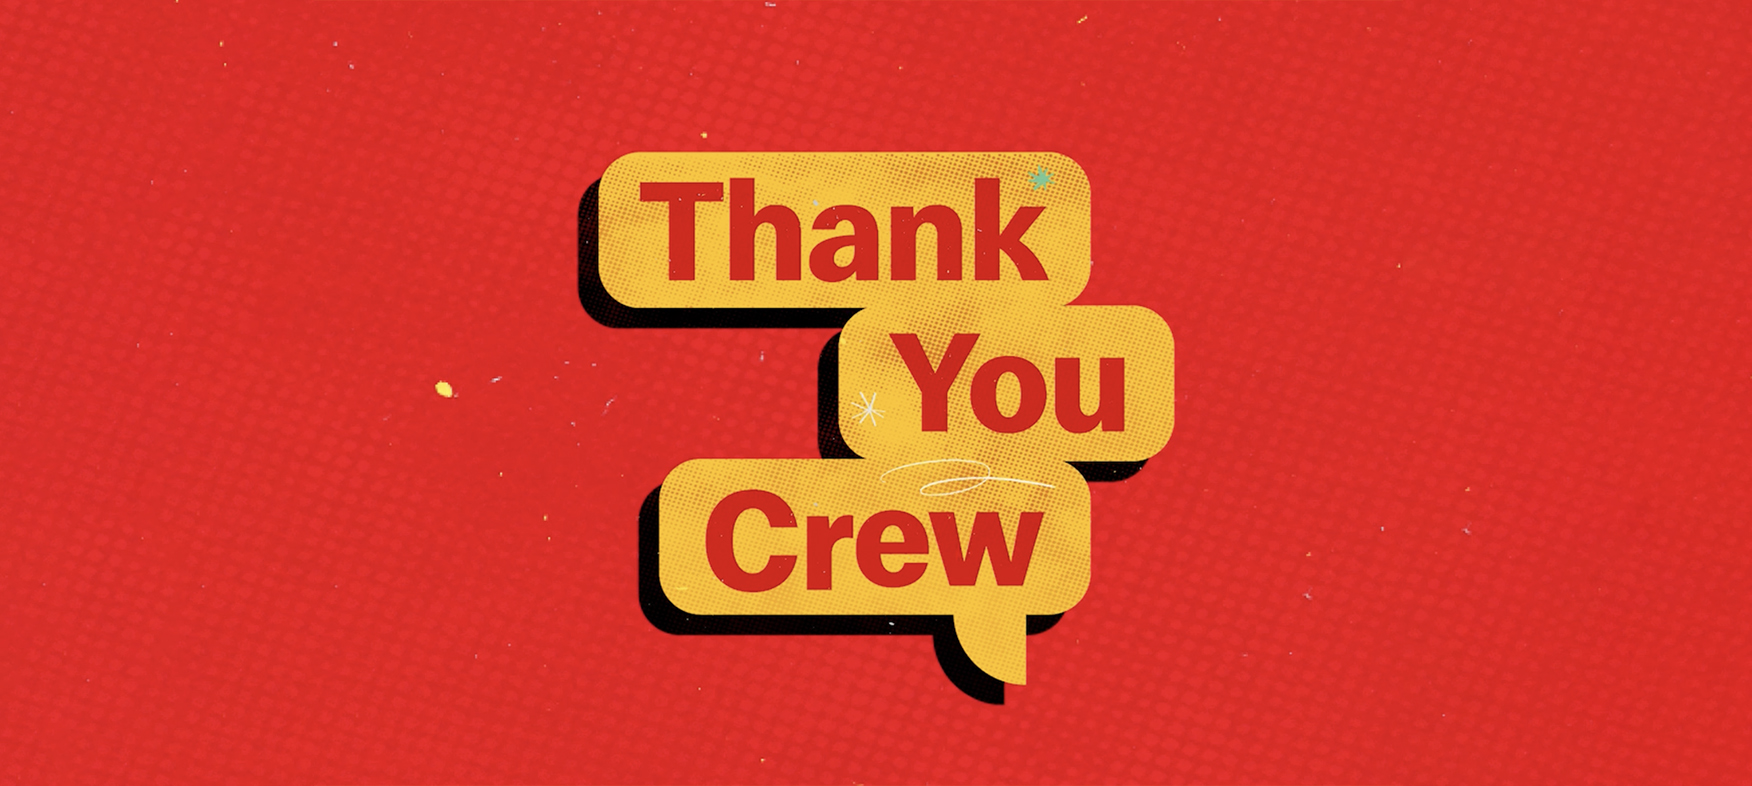 Thank You Crew